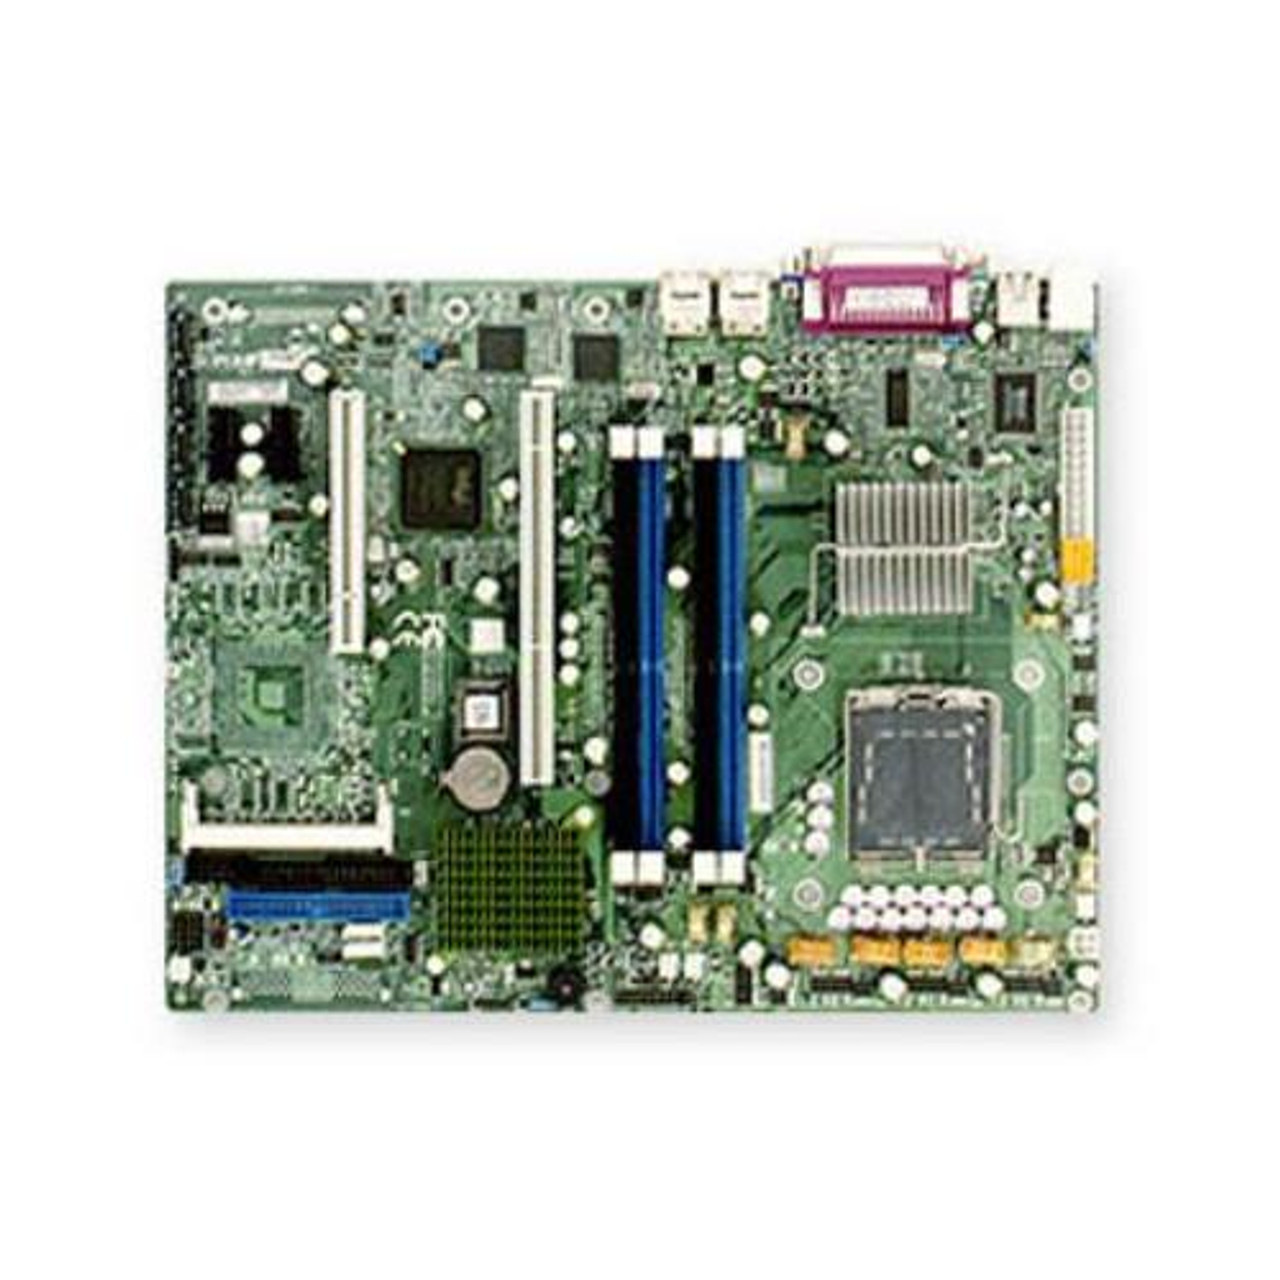 P8SCI SuperMicro Motherboard ATX E7221 LGA775 Socket SATA (RAID) 2